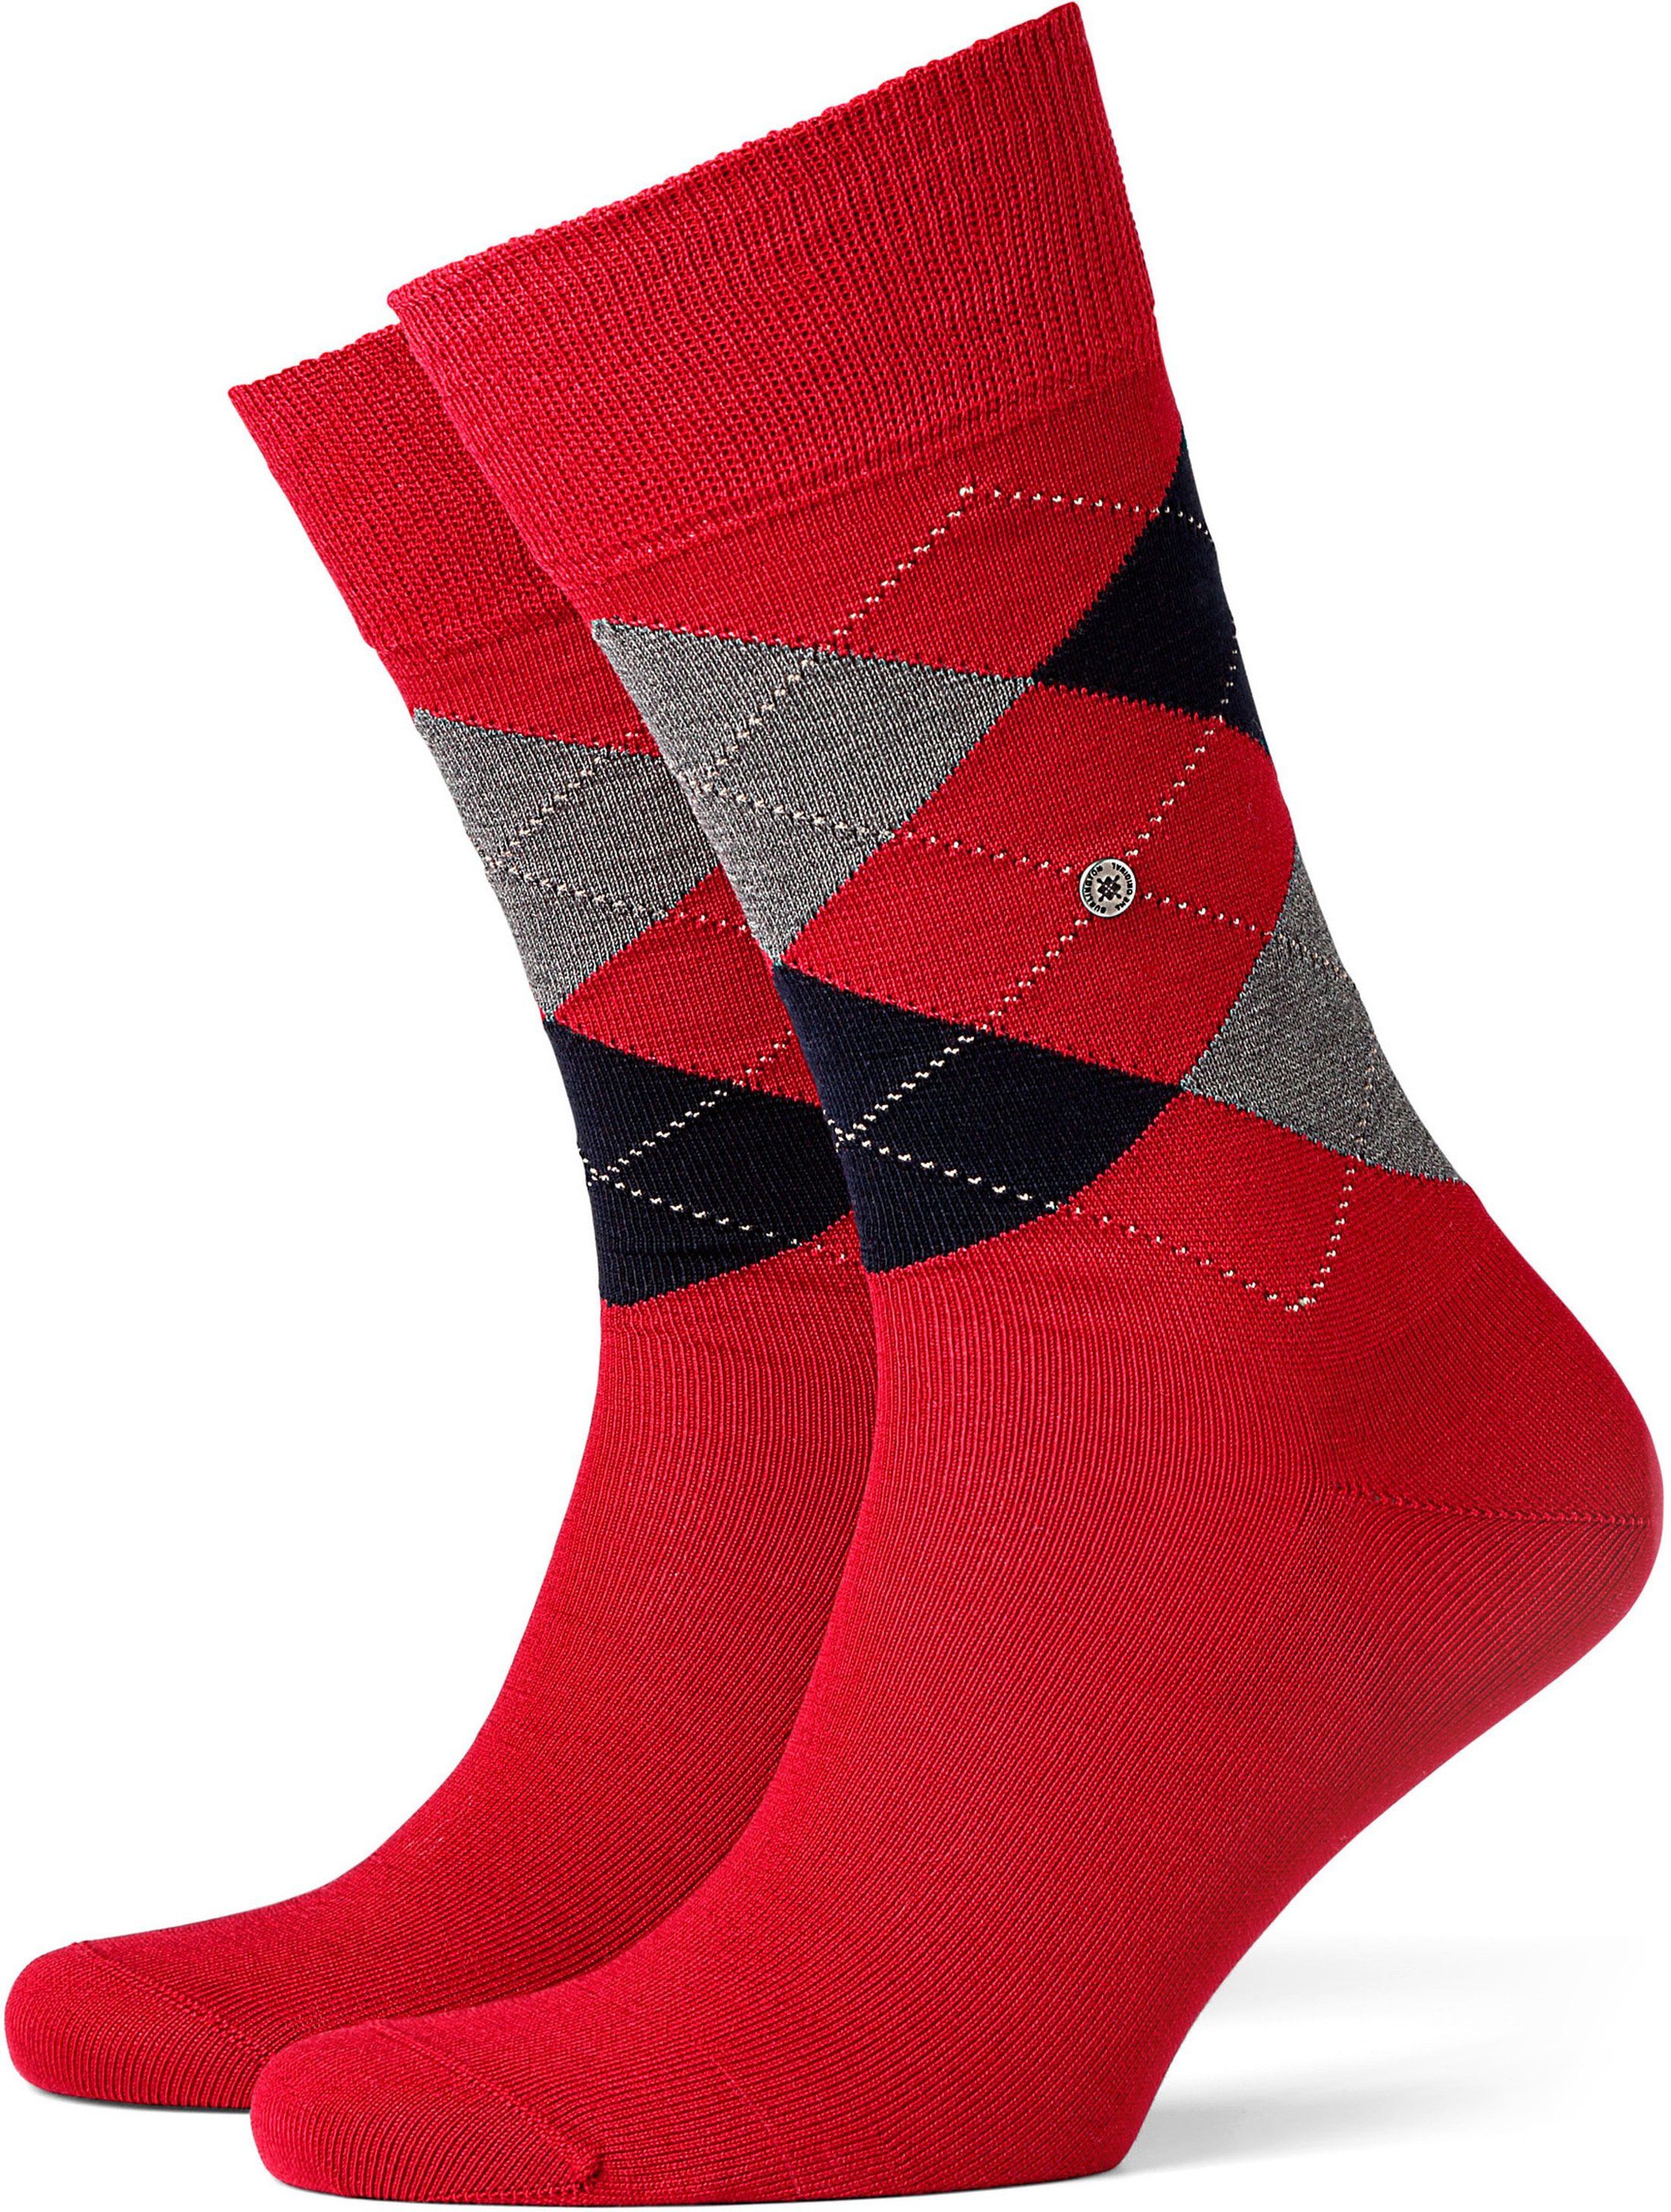 Burlington Socks Cotton 8006 Red size 40-46